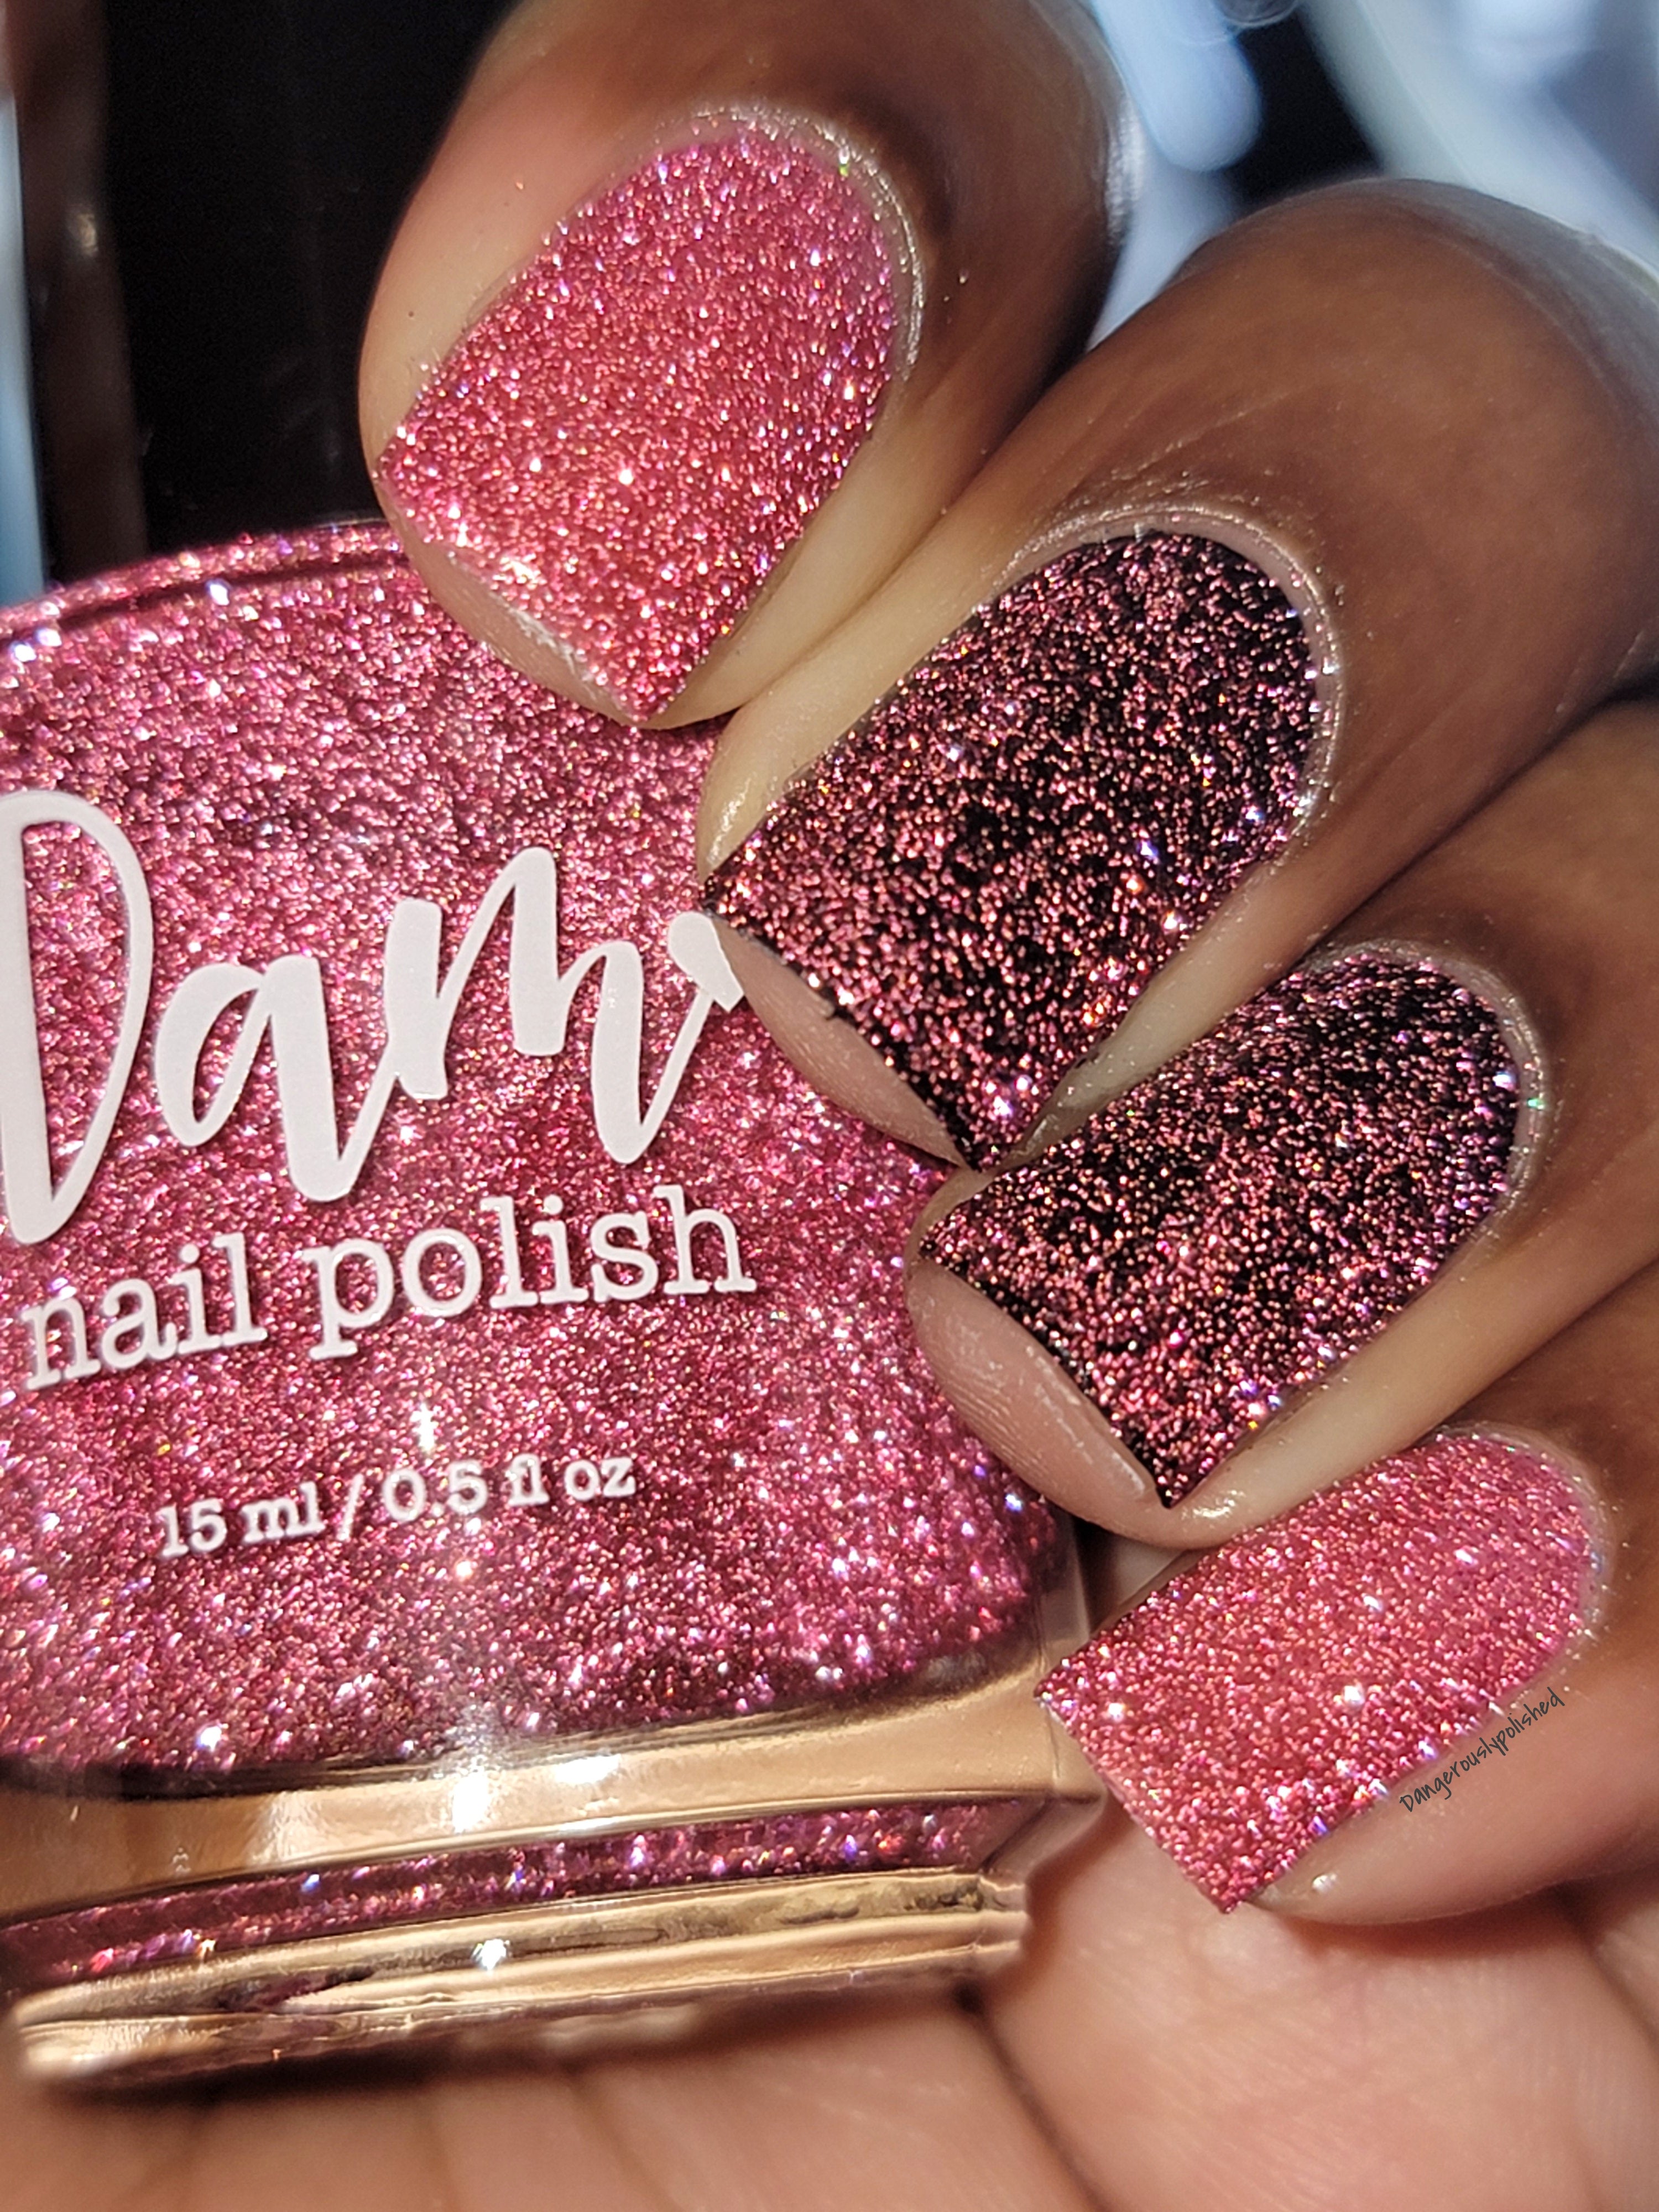 Glitter Nails: Let's Make Your Manicure Sparkle!